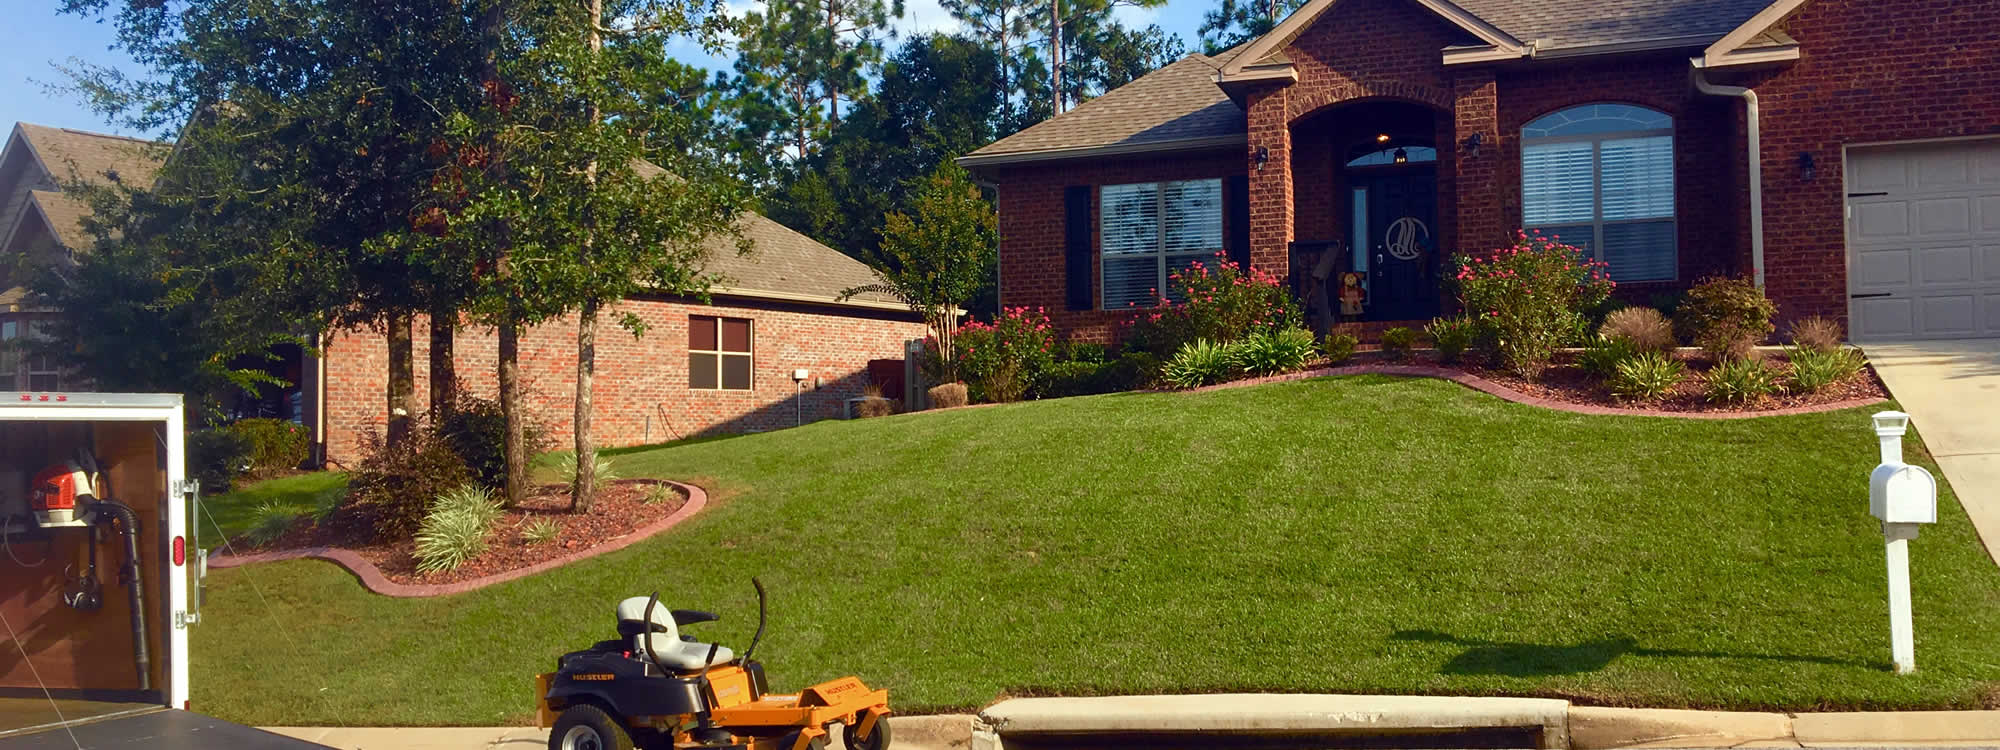 Florida Lawn Care & Landscape Maintenance Service Areas Greenview Services